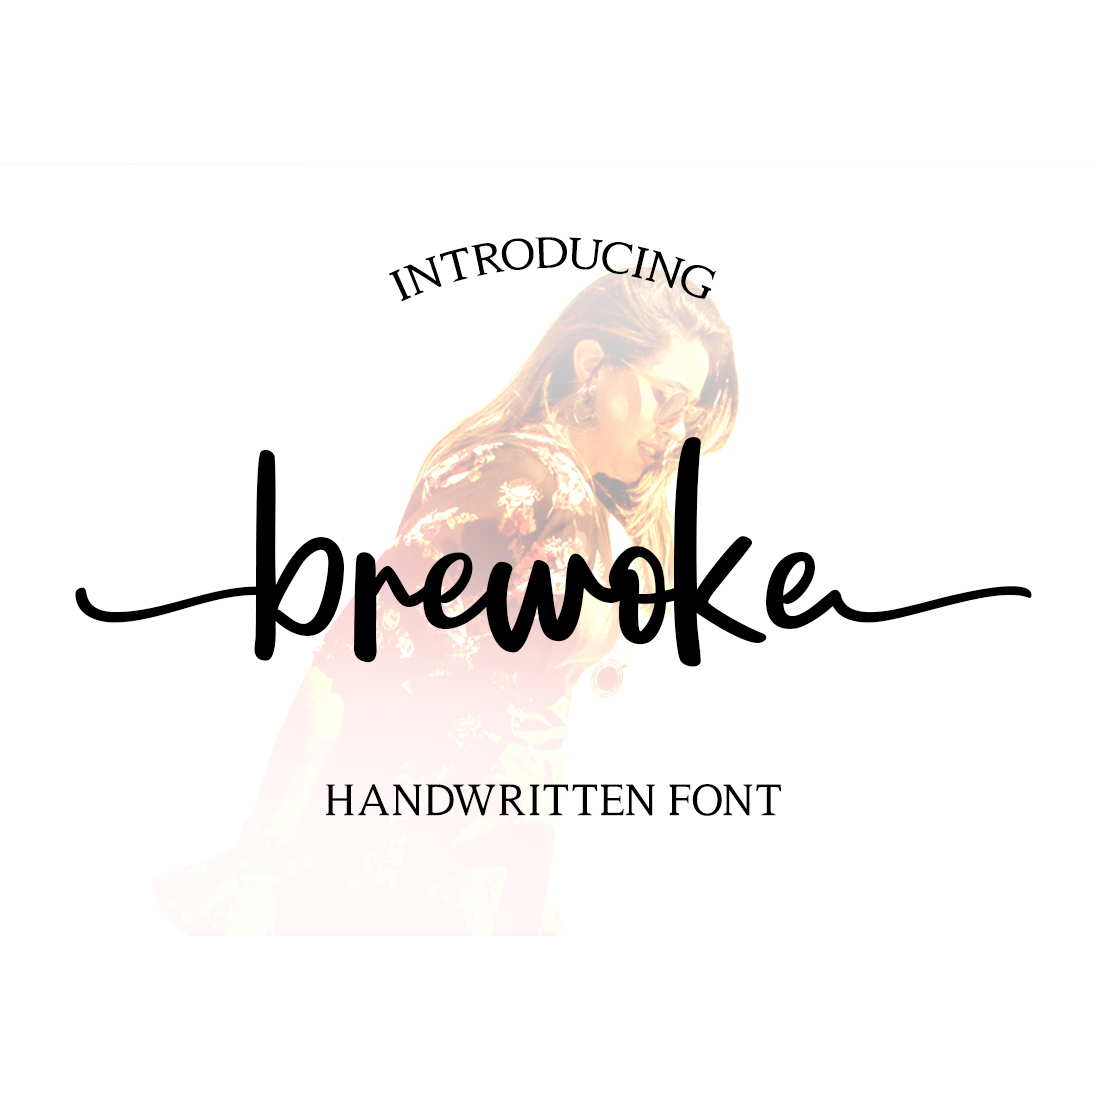 brewoke handwritten font 223